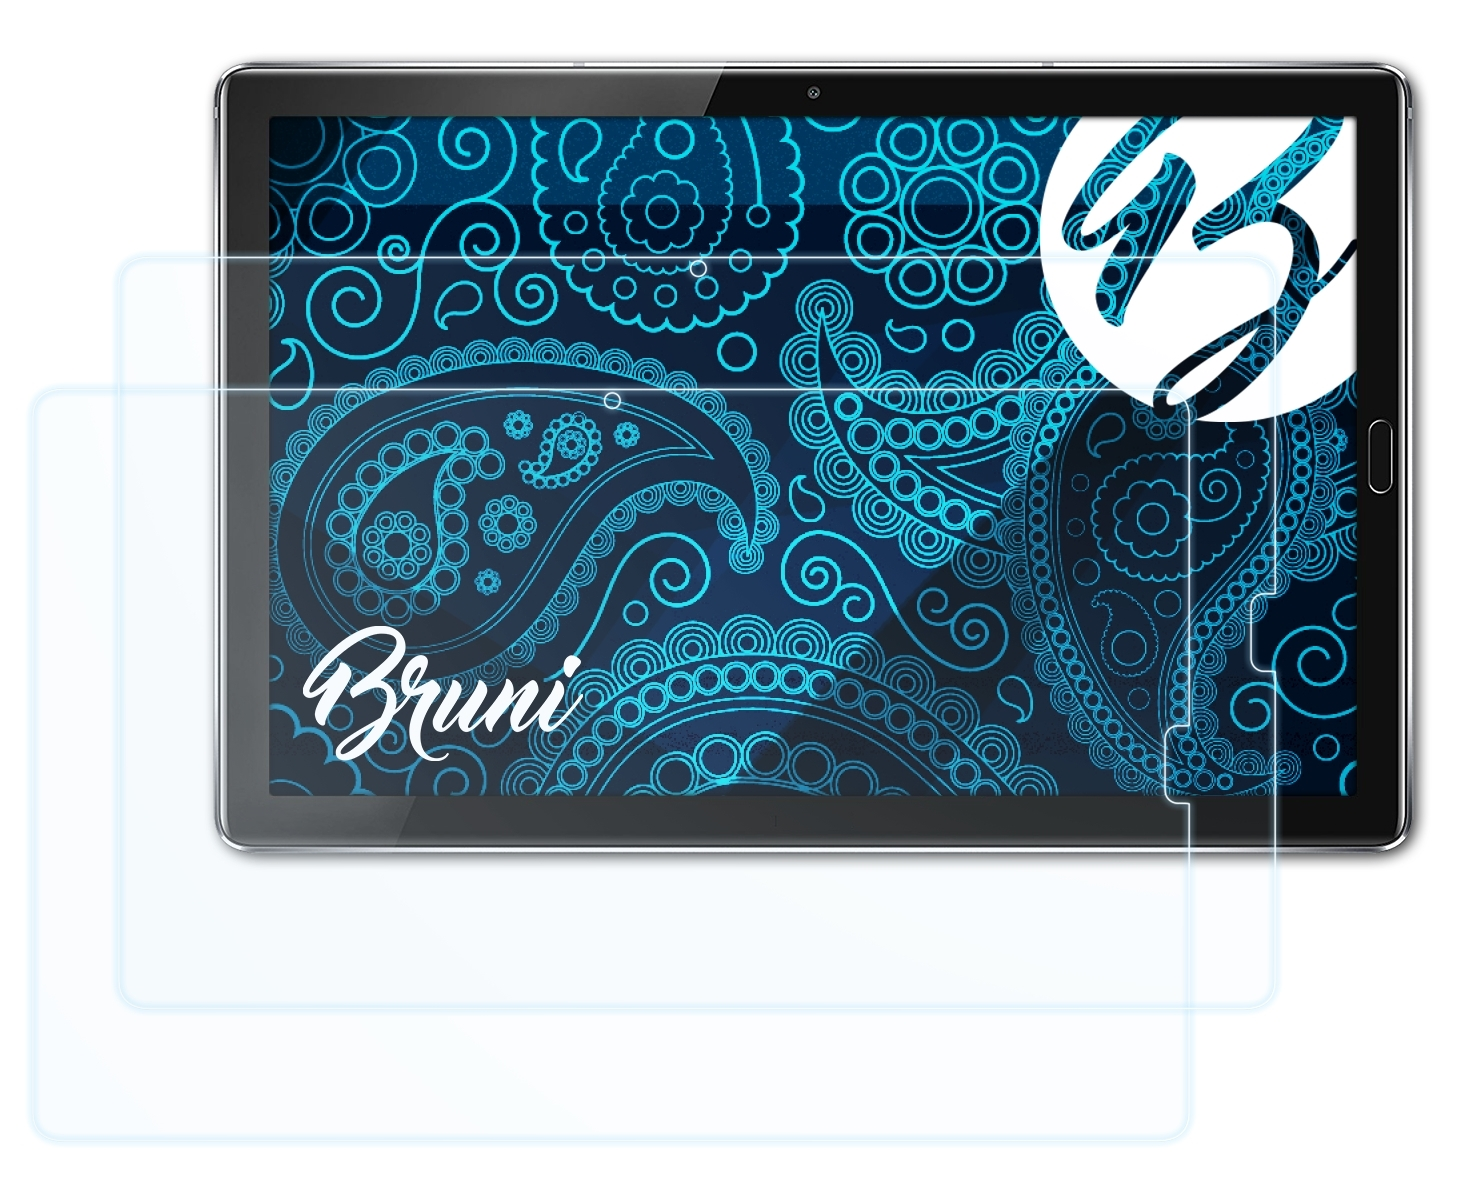 BRUNI 2x Basics-Clear Schutzfolie(für M5 Huawei Mediapad 10)